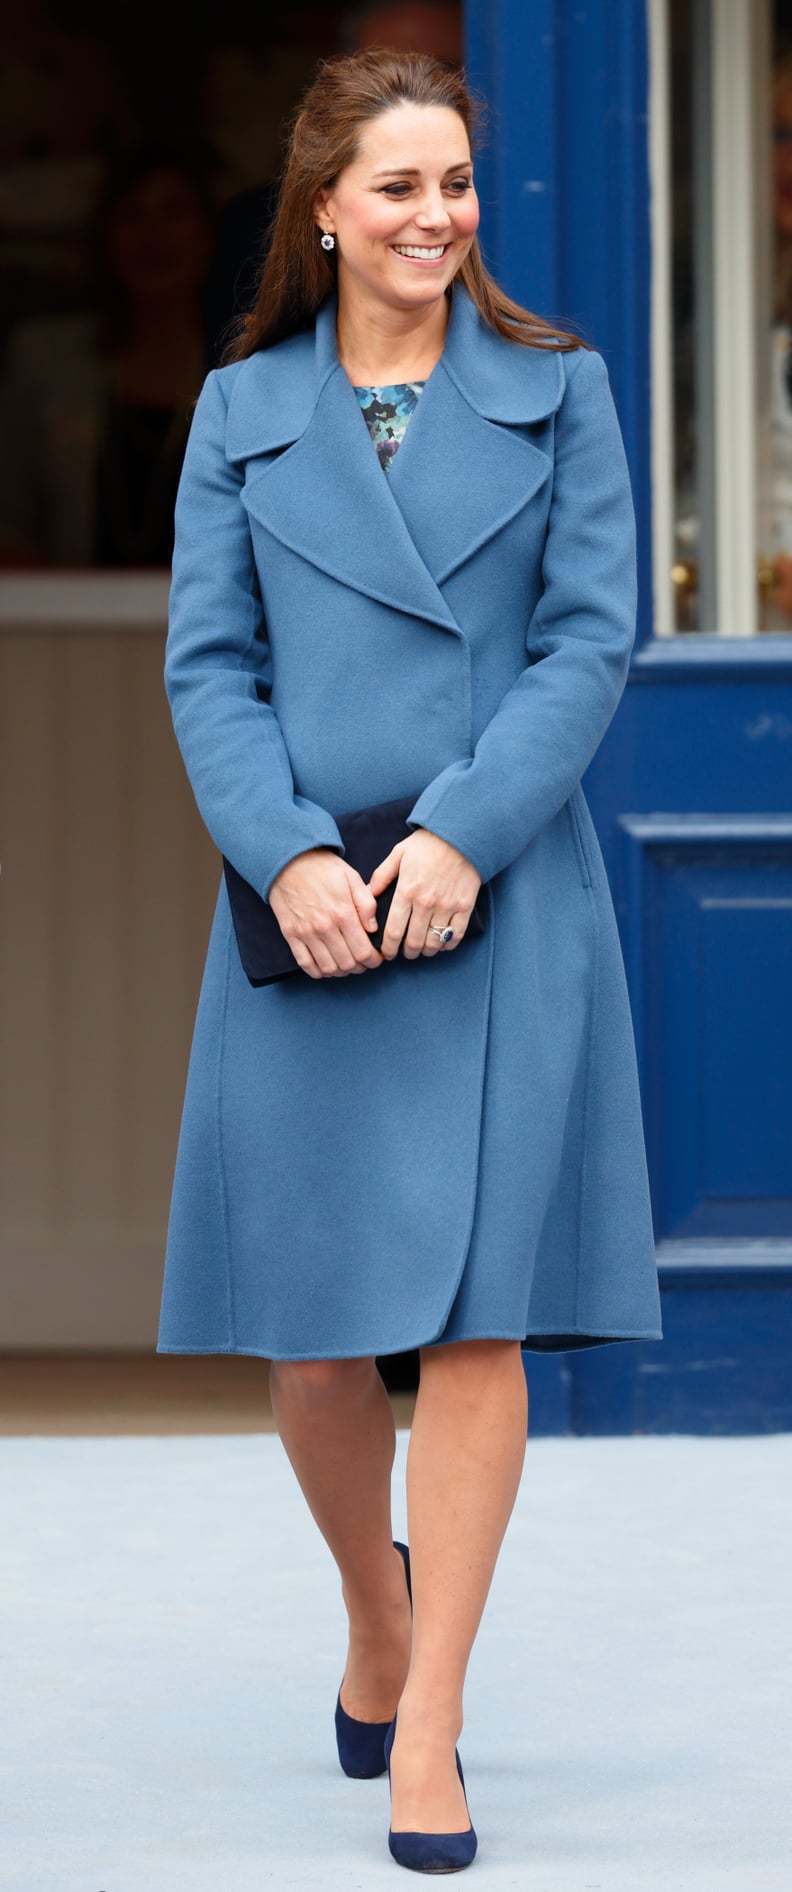 Kate Middleton at Emma Bridgewater's Factory in 2015